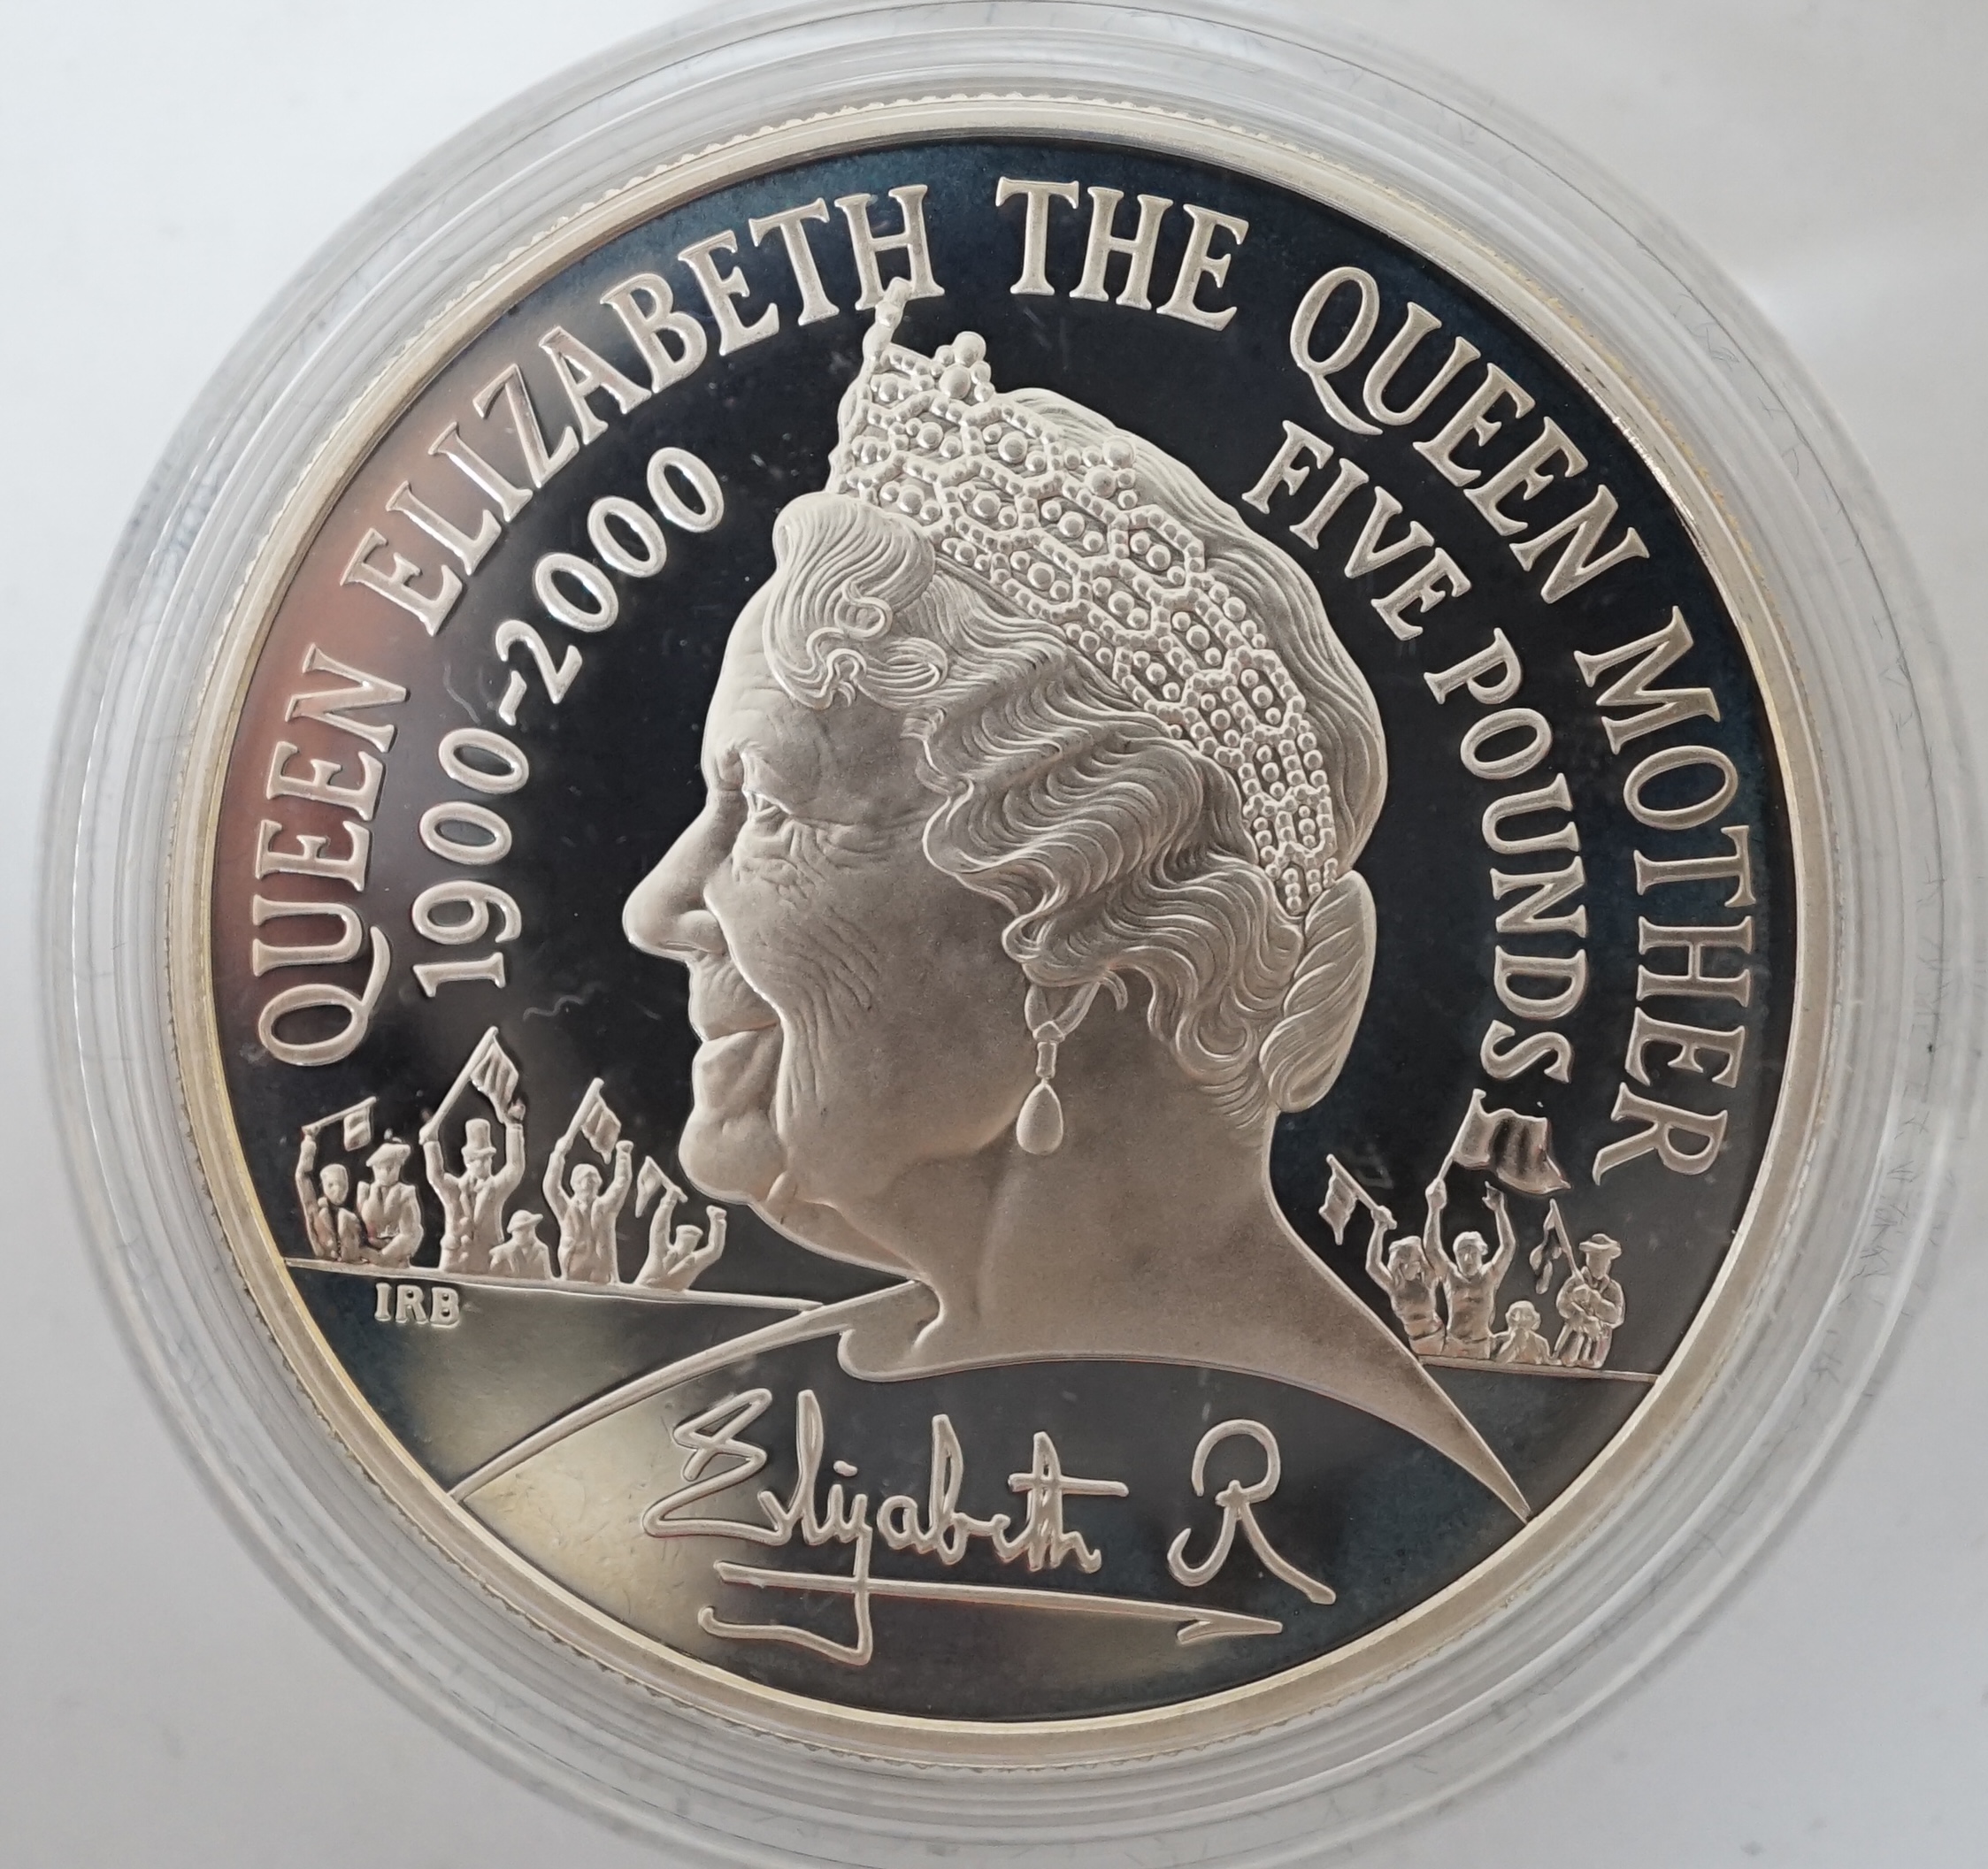 Queen Elizabeth II proof coins to include 2002 Commonwealth Games set, Queen Centenary Crown, DNA silver proof 2003, various BUNC coins.